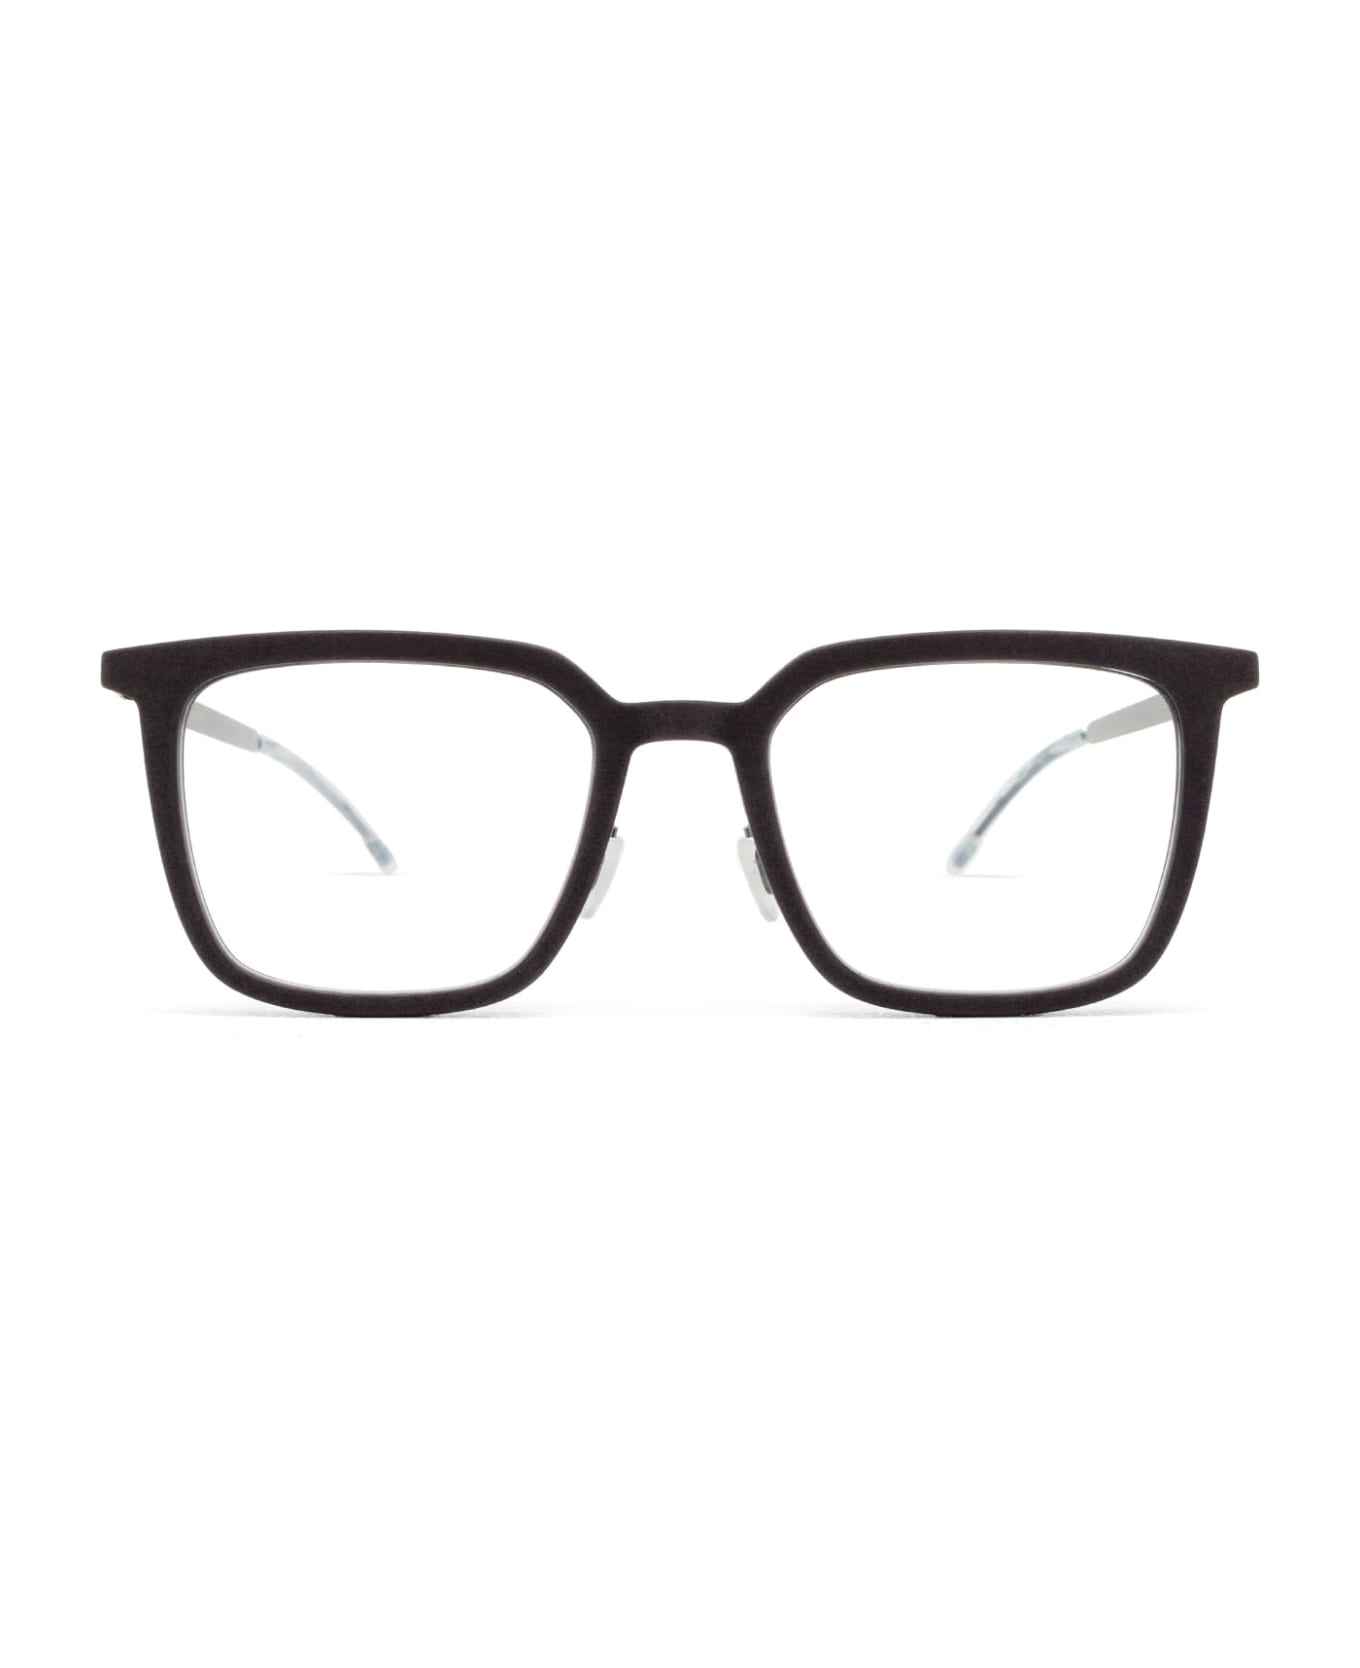 Mykita Kolding Mh60-slate Grey/shiny Graphite Glasses - MH60-Slate Grey/Shiny Graphite